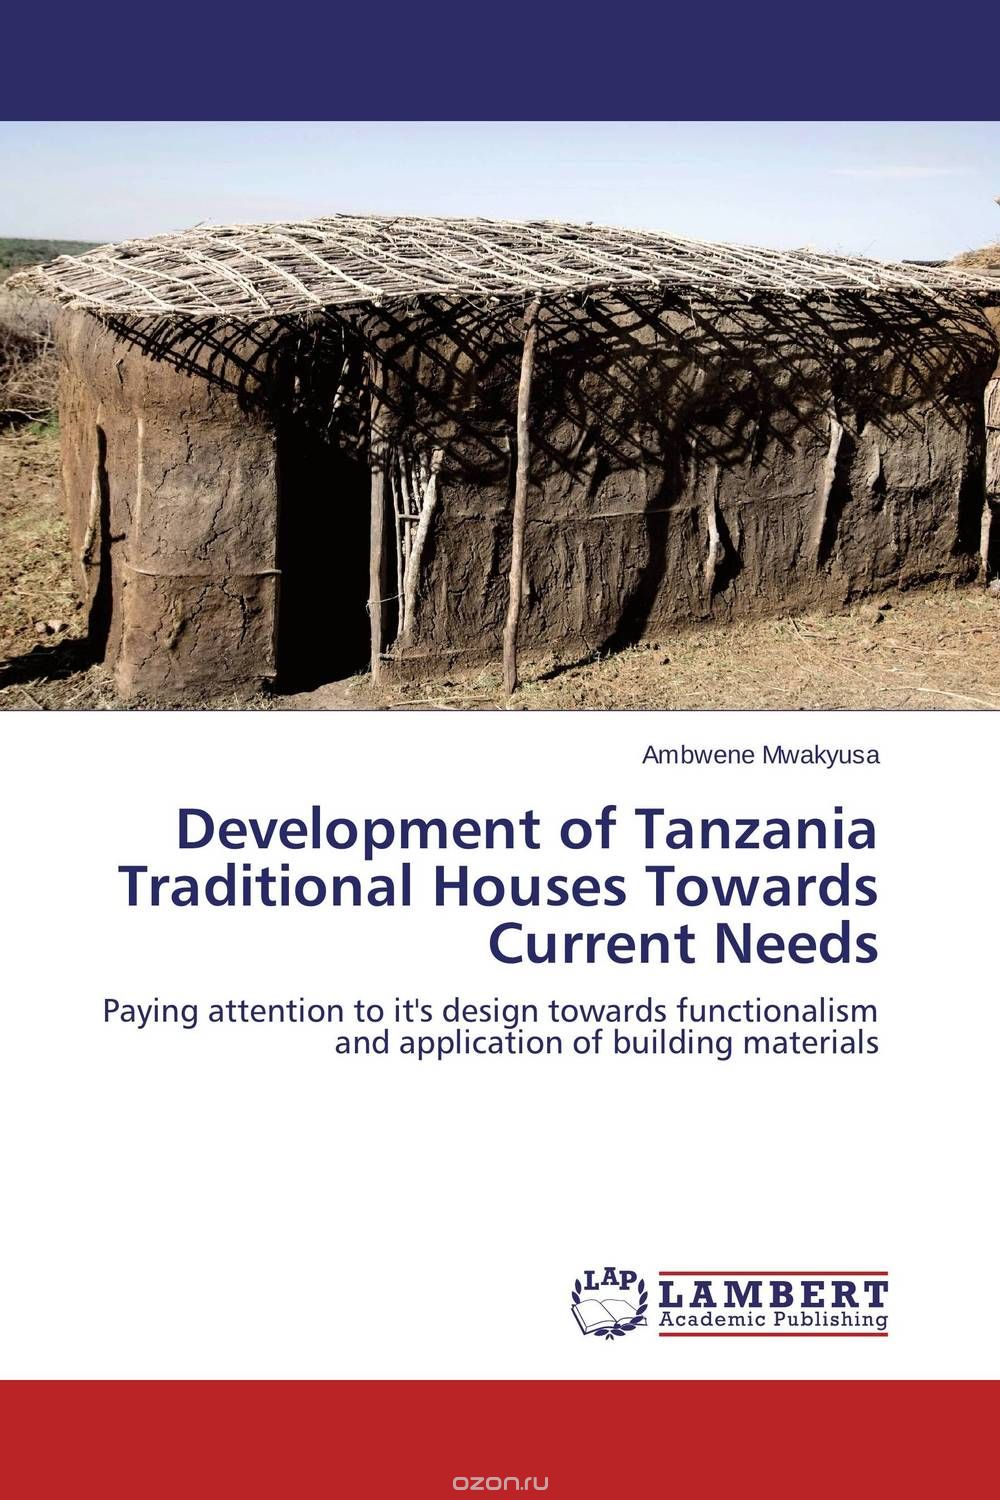 Скачать книгу "Development of Tanzania Traditional Houses Towards Current Needs"